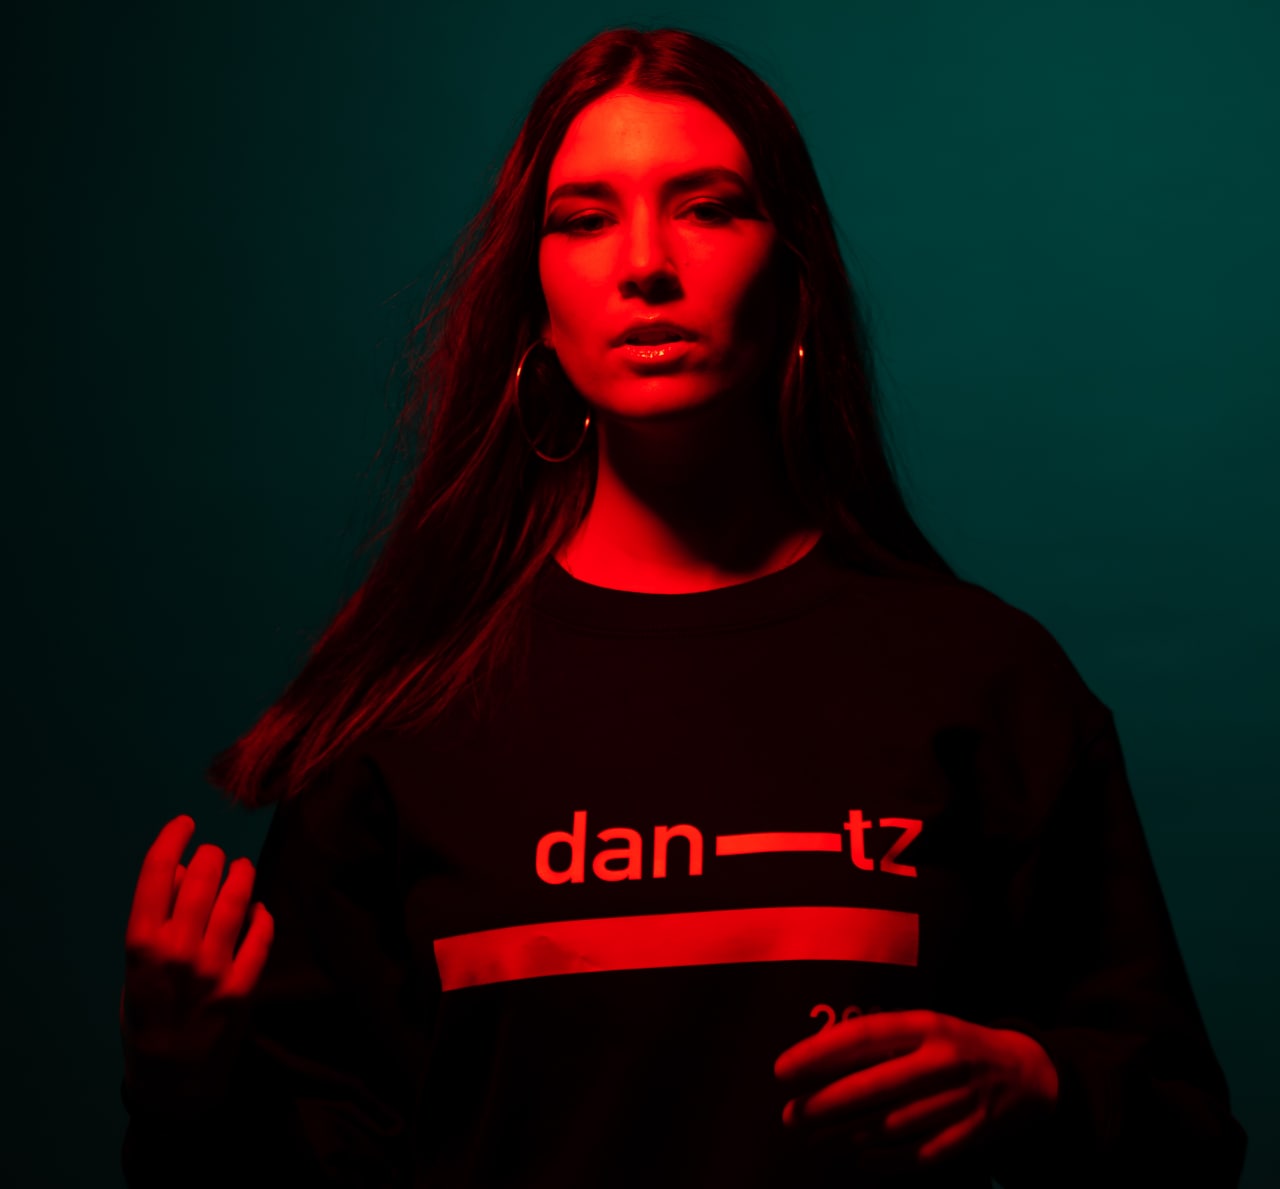 Dantz Wear: ropa sostenible que fomenta la cultura circular